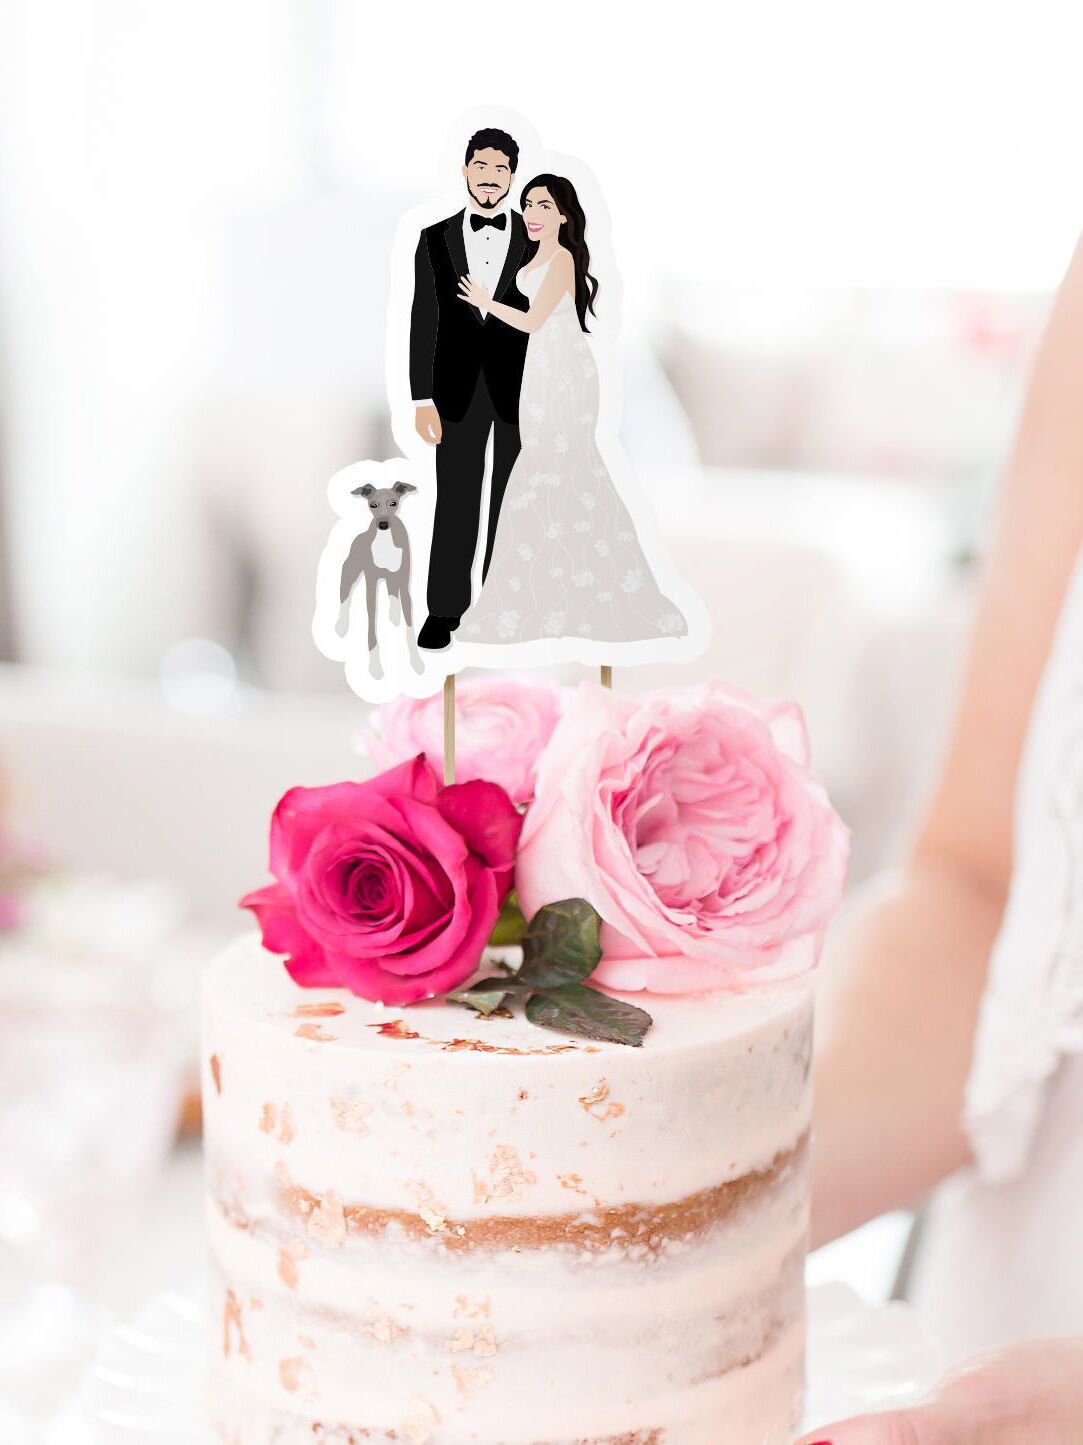 Topper de tarta de boda con retrato personalizado